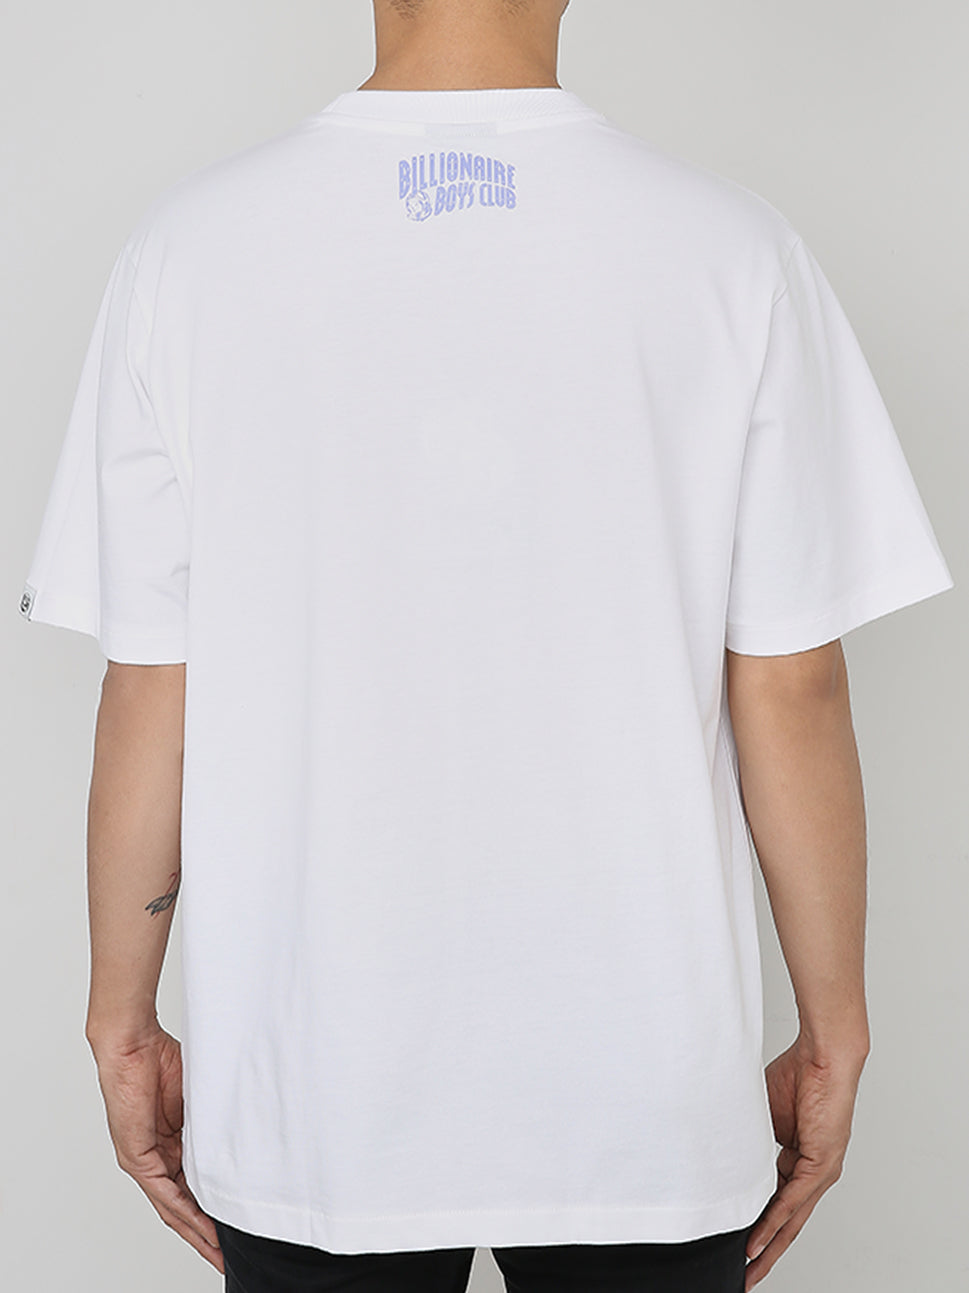 Billionaire Boys Club Standing Astro T Shirt White